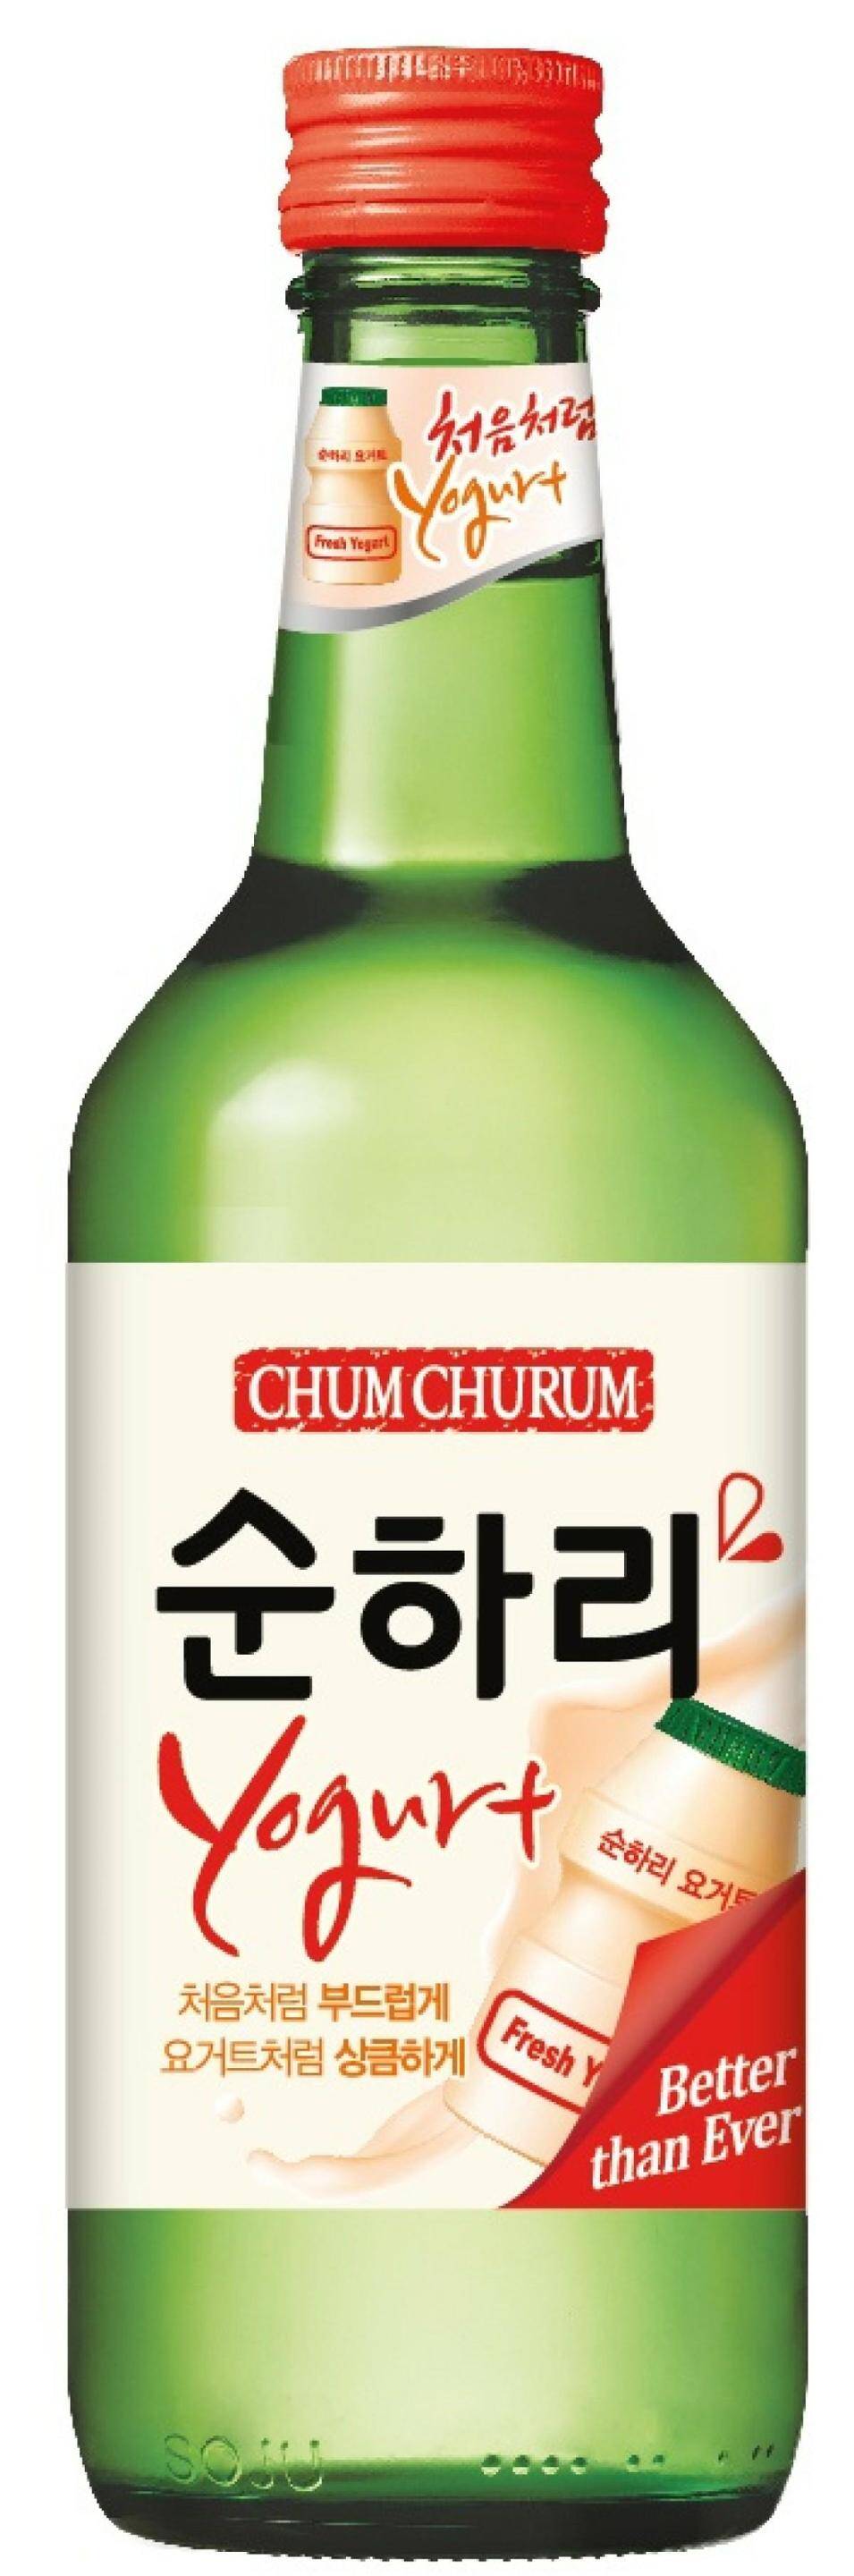 LOTTE Soju Chum Churum jogurtowe (12%alk) 350ml 